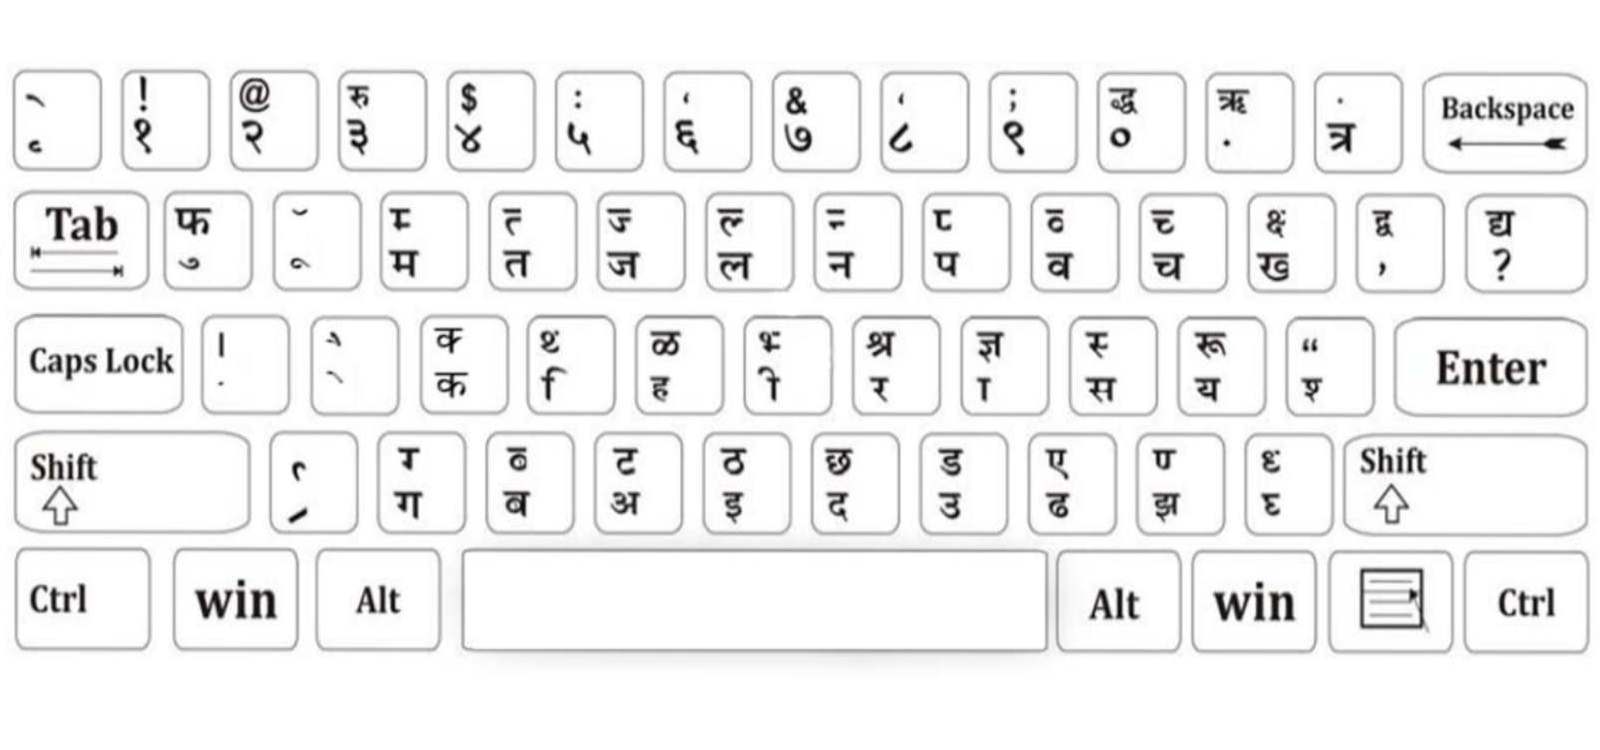 Hindi Typing software, free download For Mac